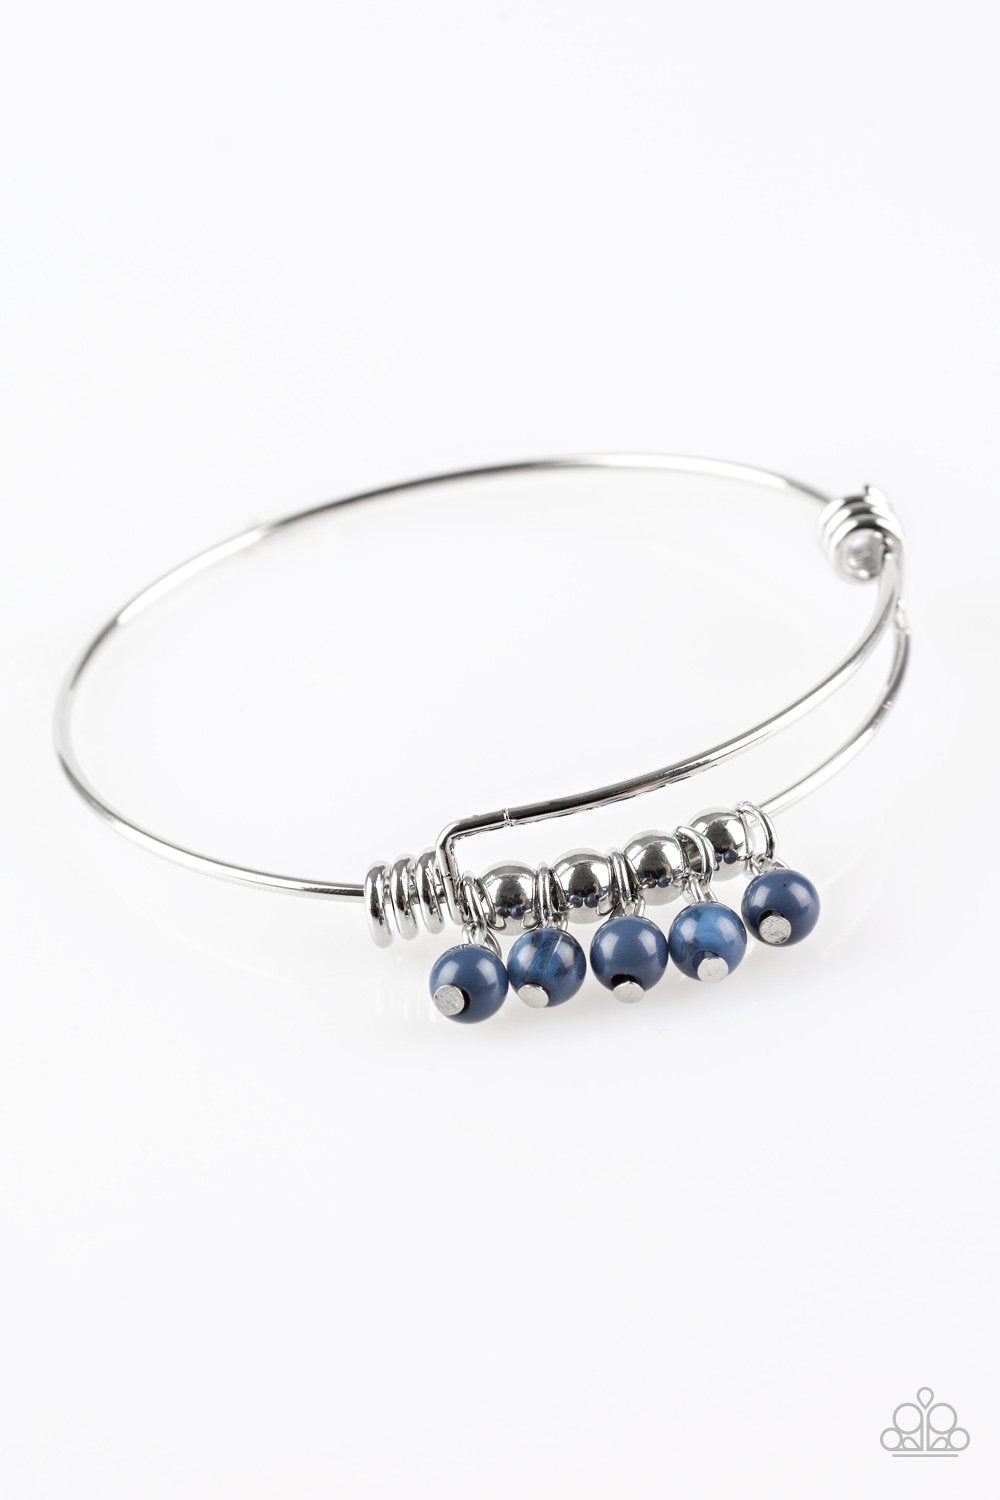 Be Adored Jewelry All Roads Lead To Roam Blue Paparazzi Bracelet